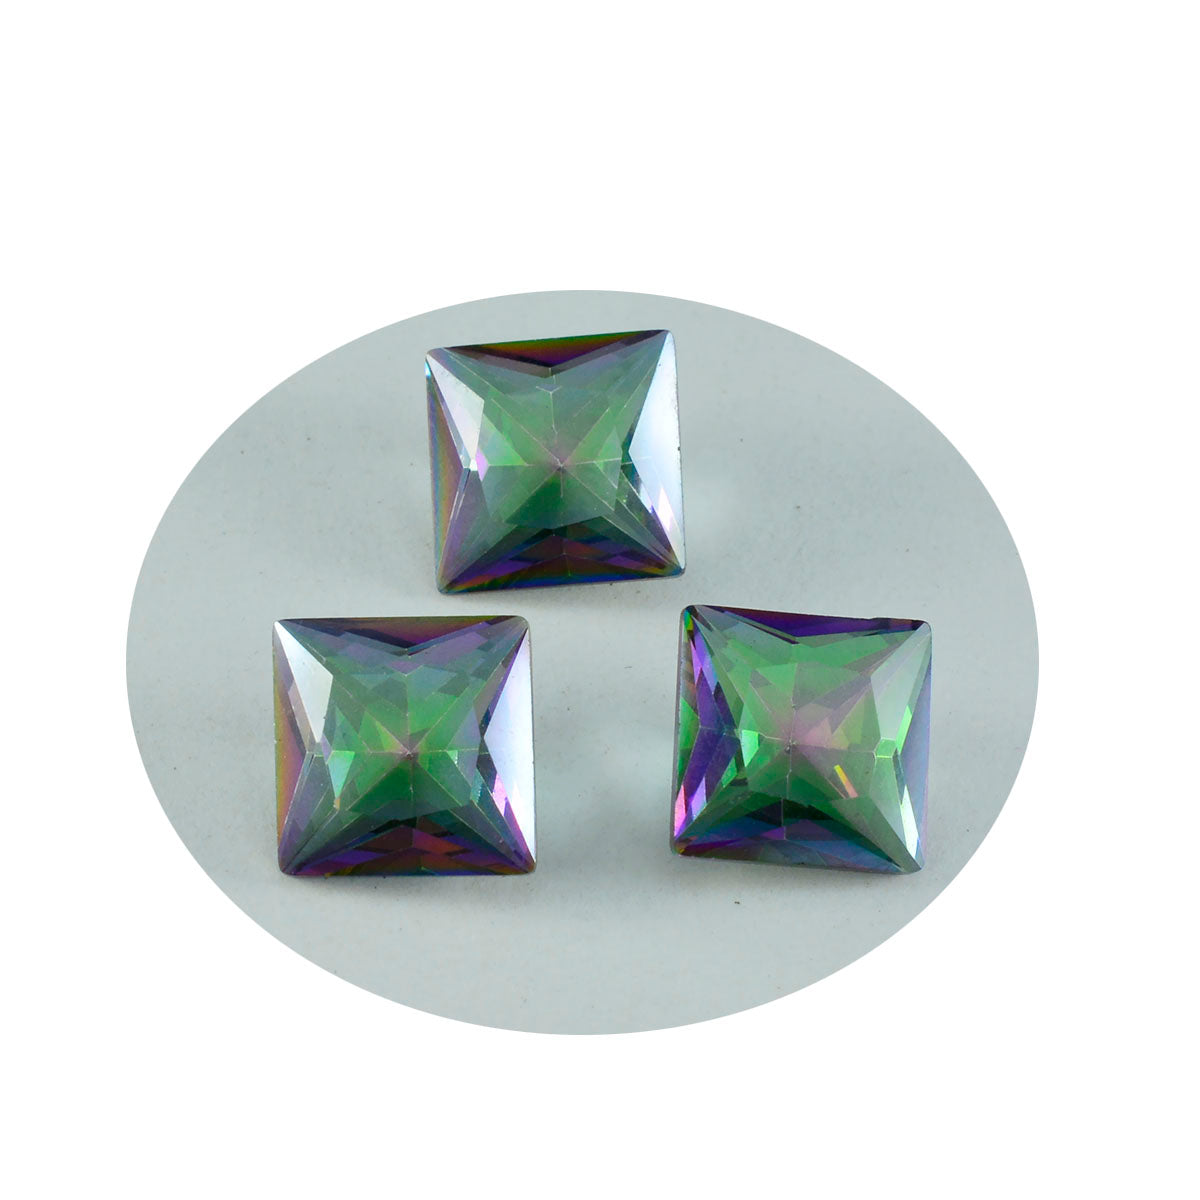 Riyogems 1PC Multi Color Mystic Quartz Faceted 14x14 mm Square Shape astonishing Quality Loose Gems